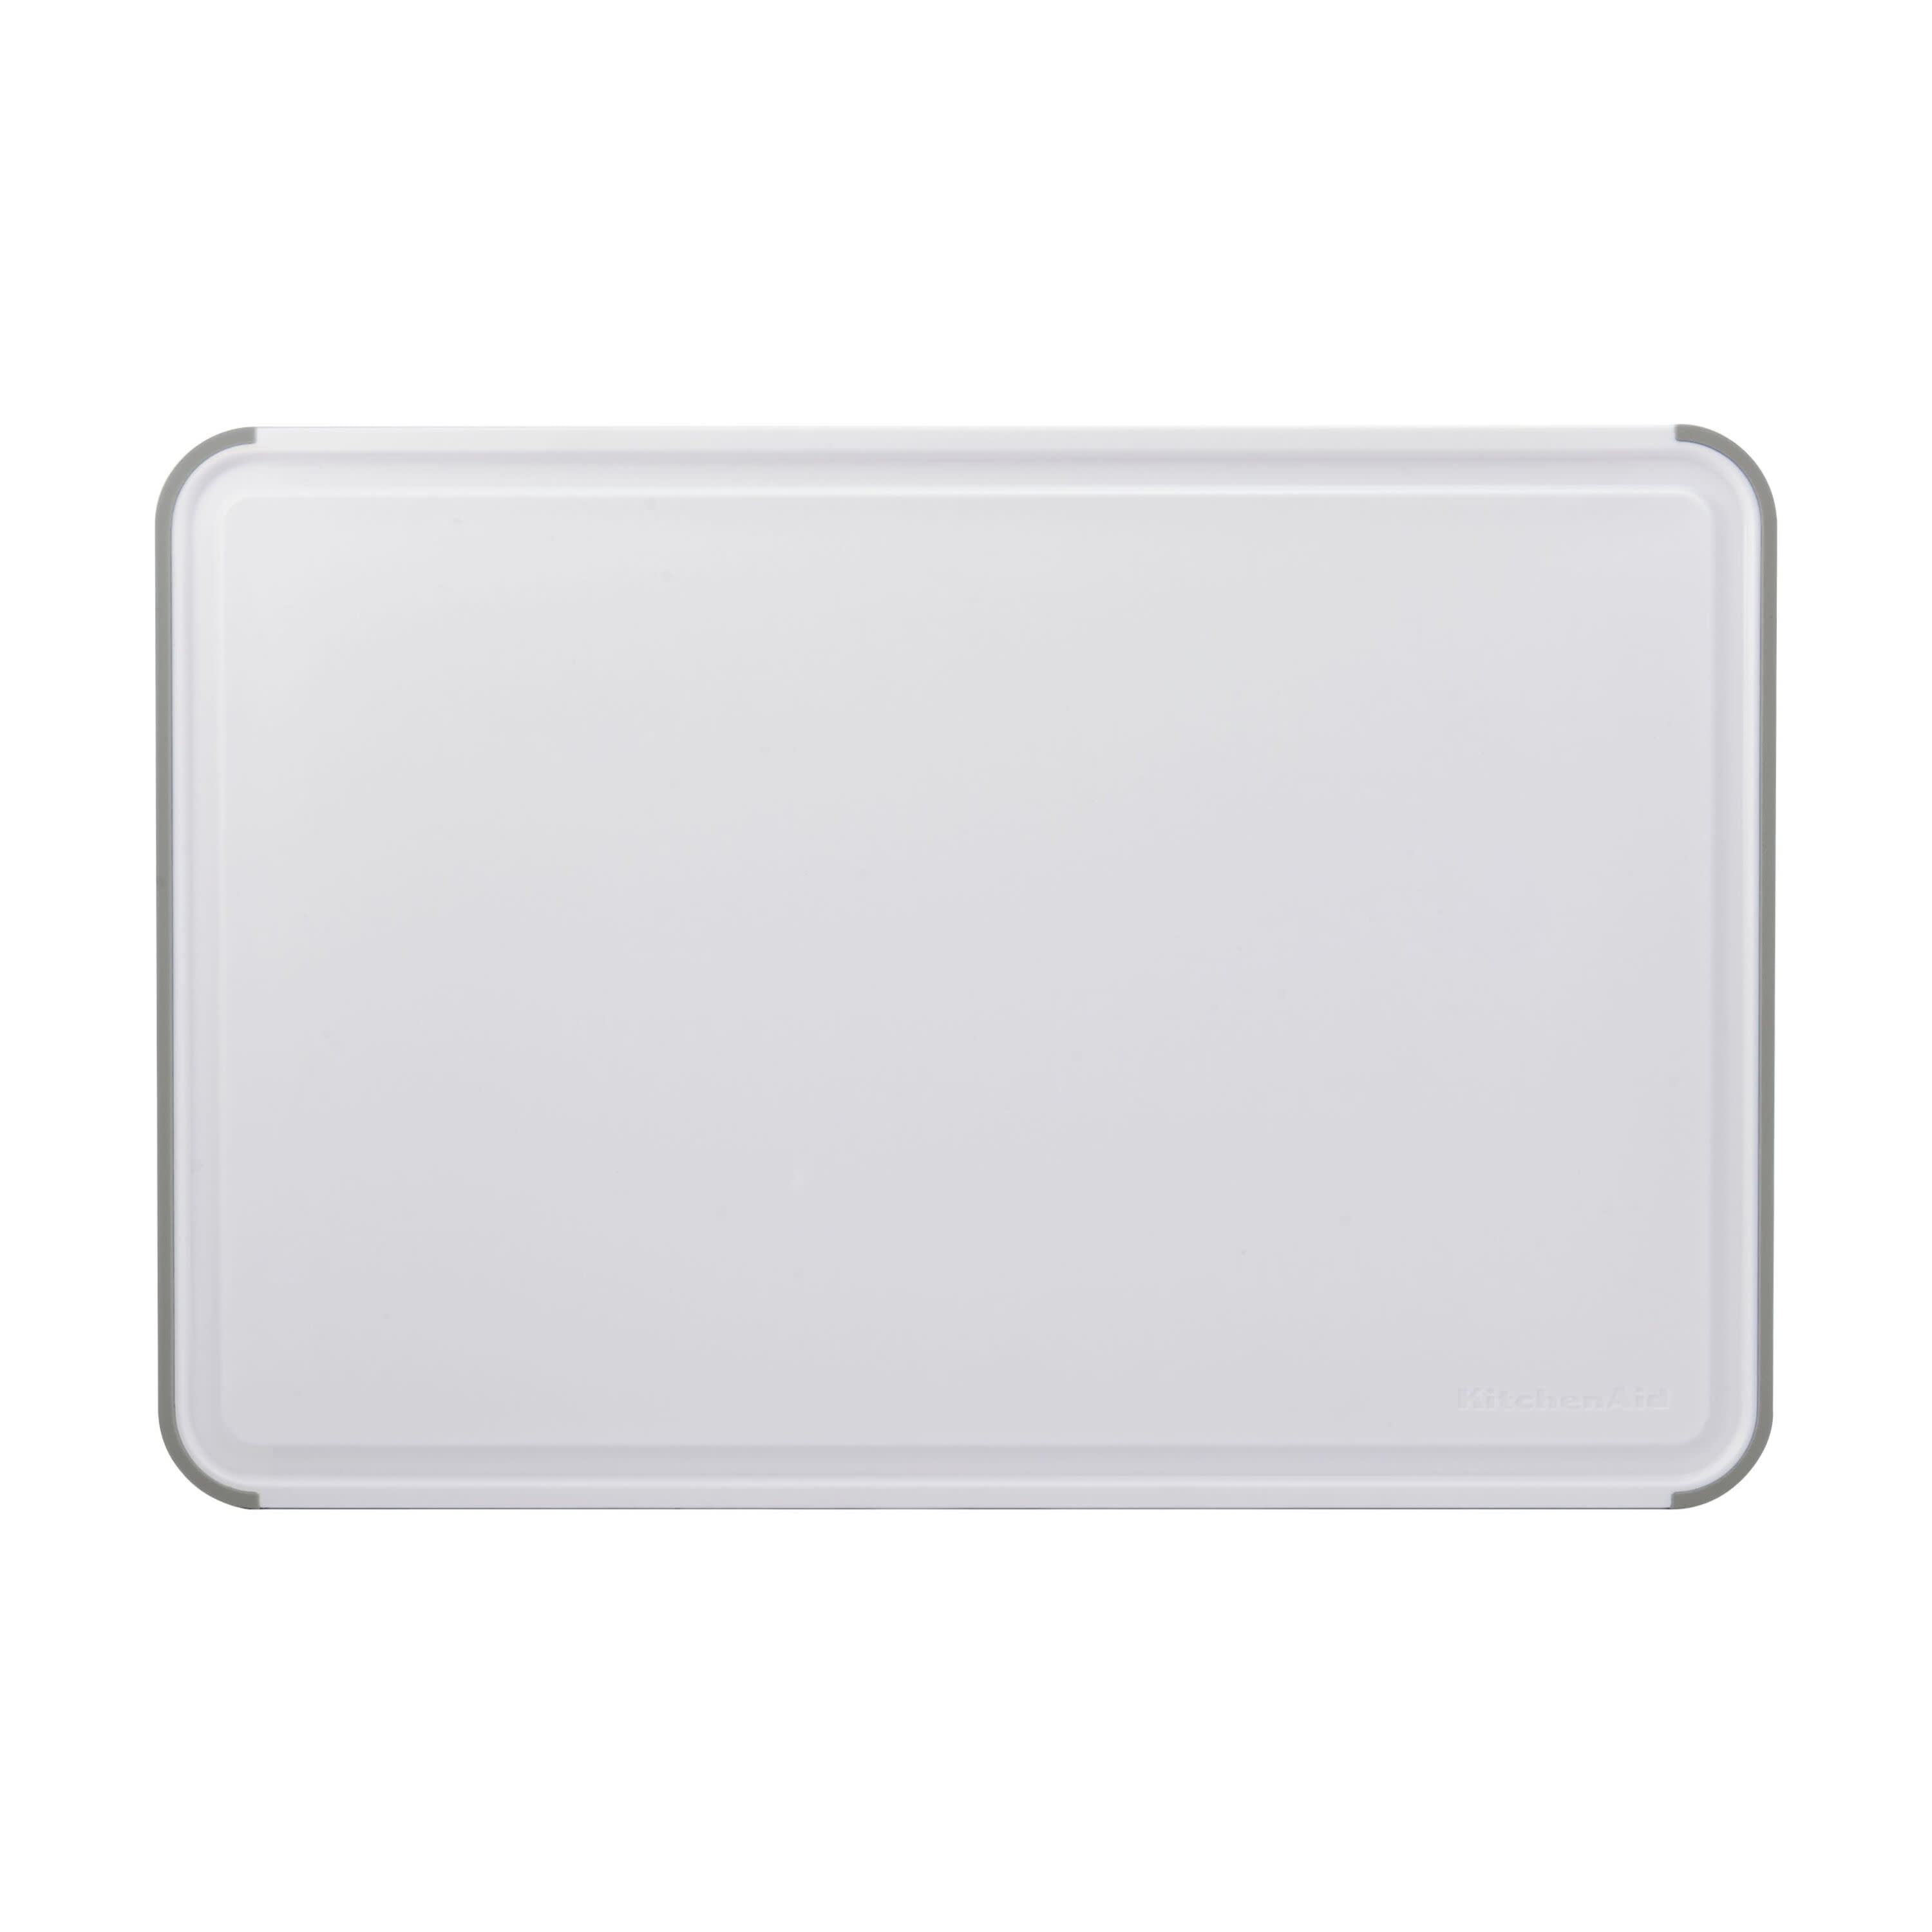 12 x 18 White Plastic Cutting Board w/ Handle